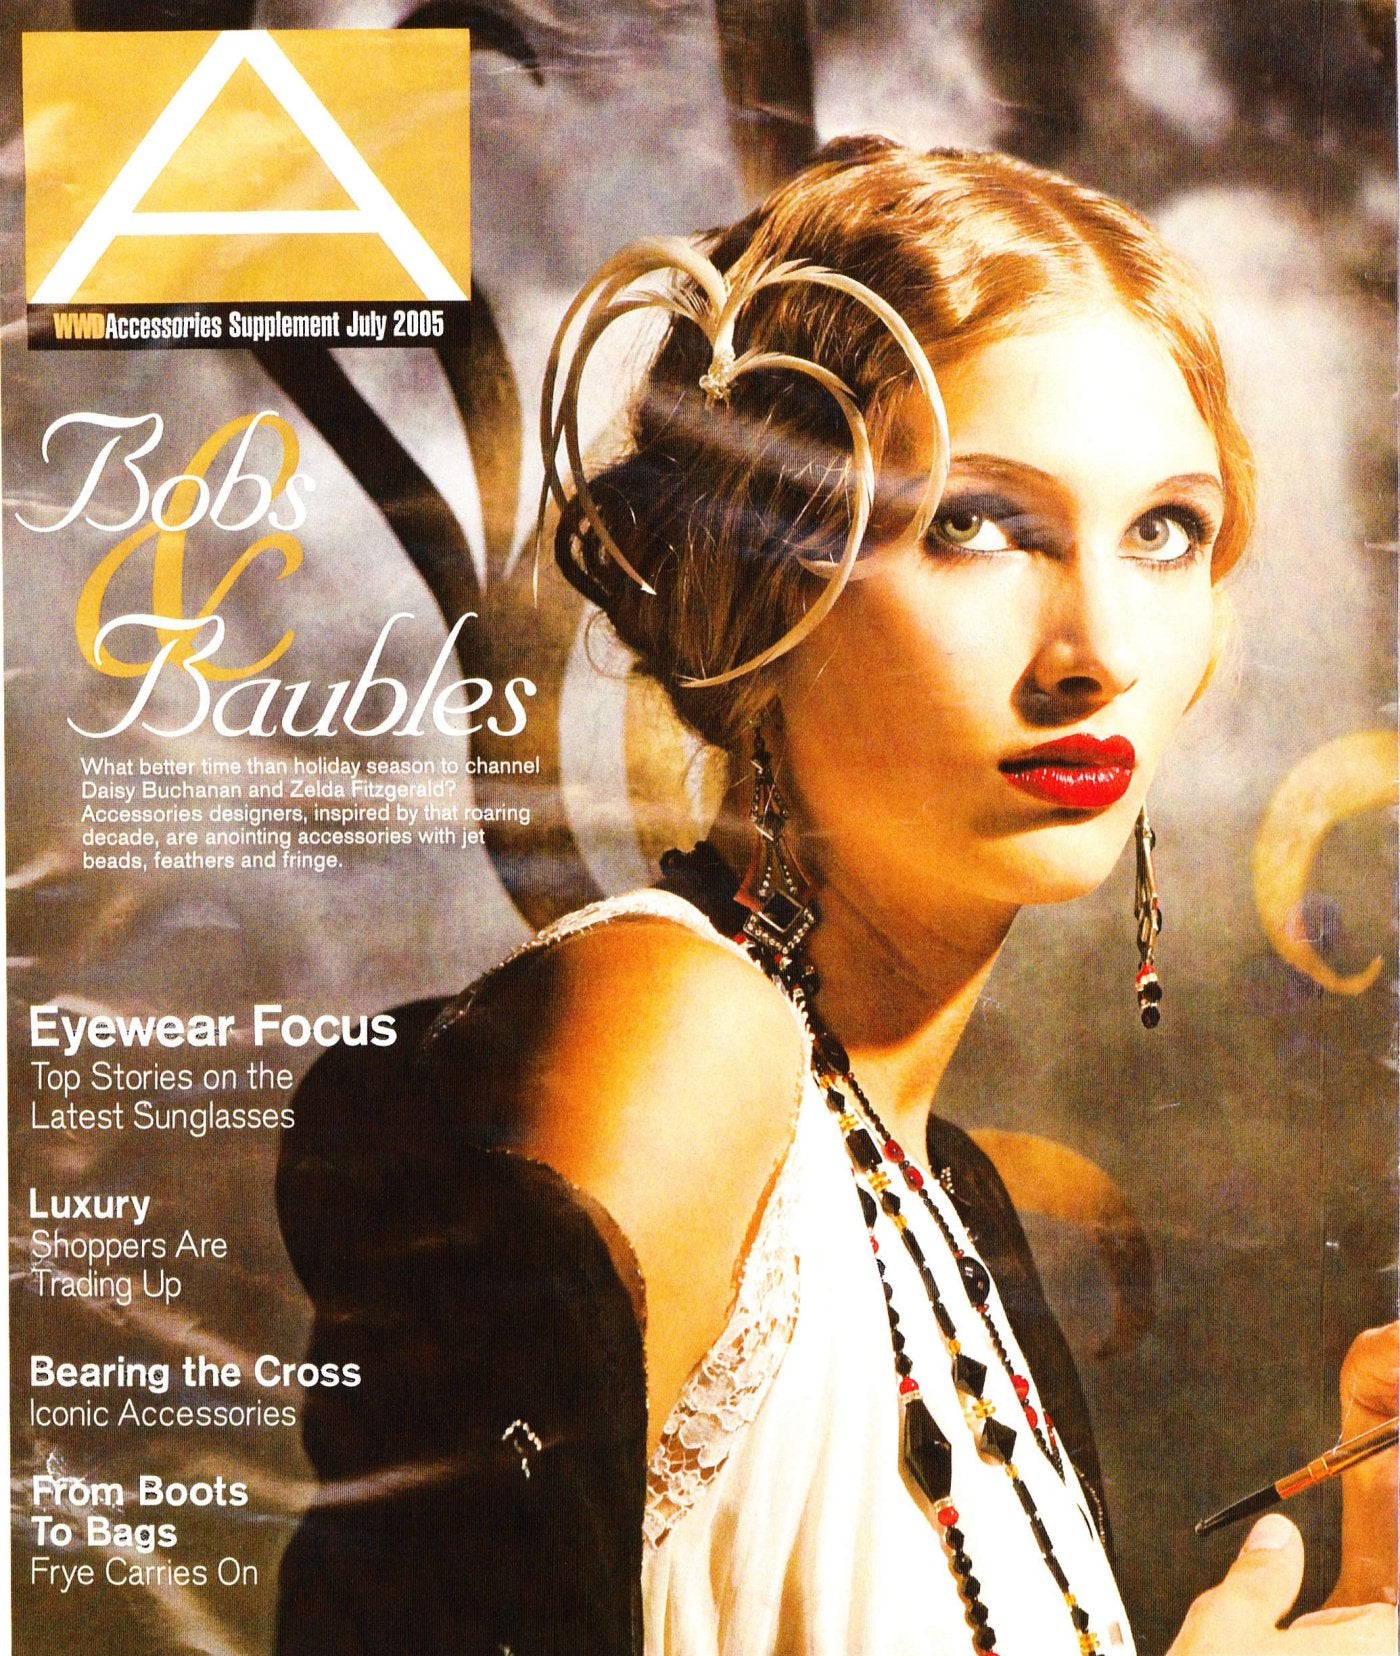 WWD Accesories Magazine July 2005 - Erika Peña